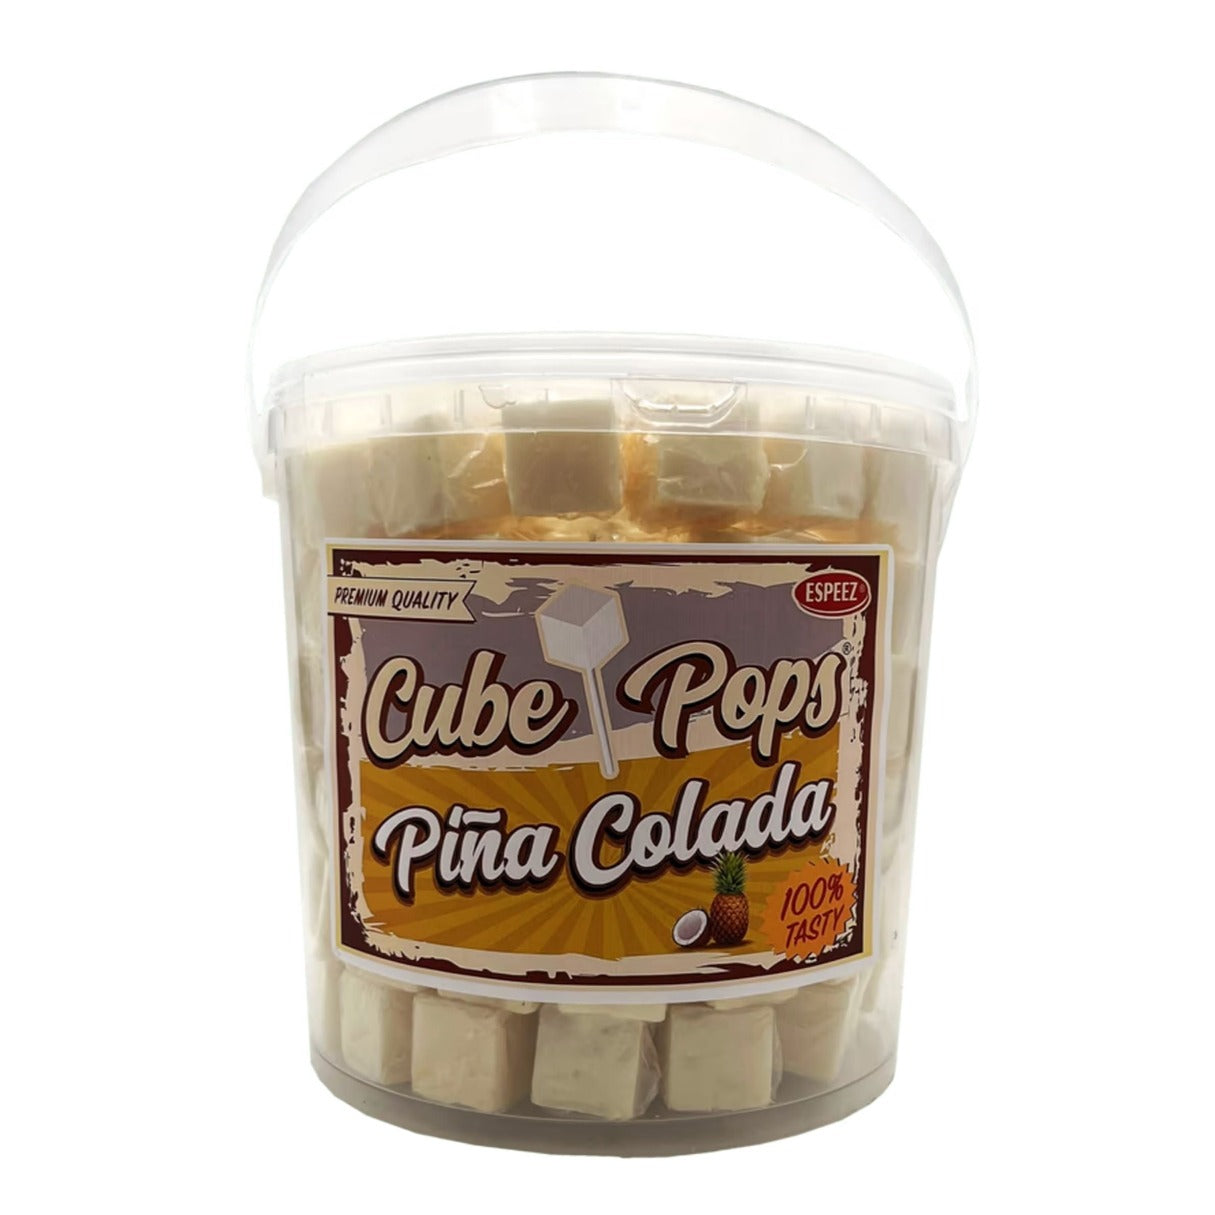 Espeez Cube Pops Pina Colada Jar - 100ct